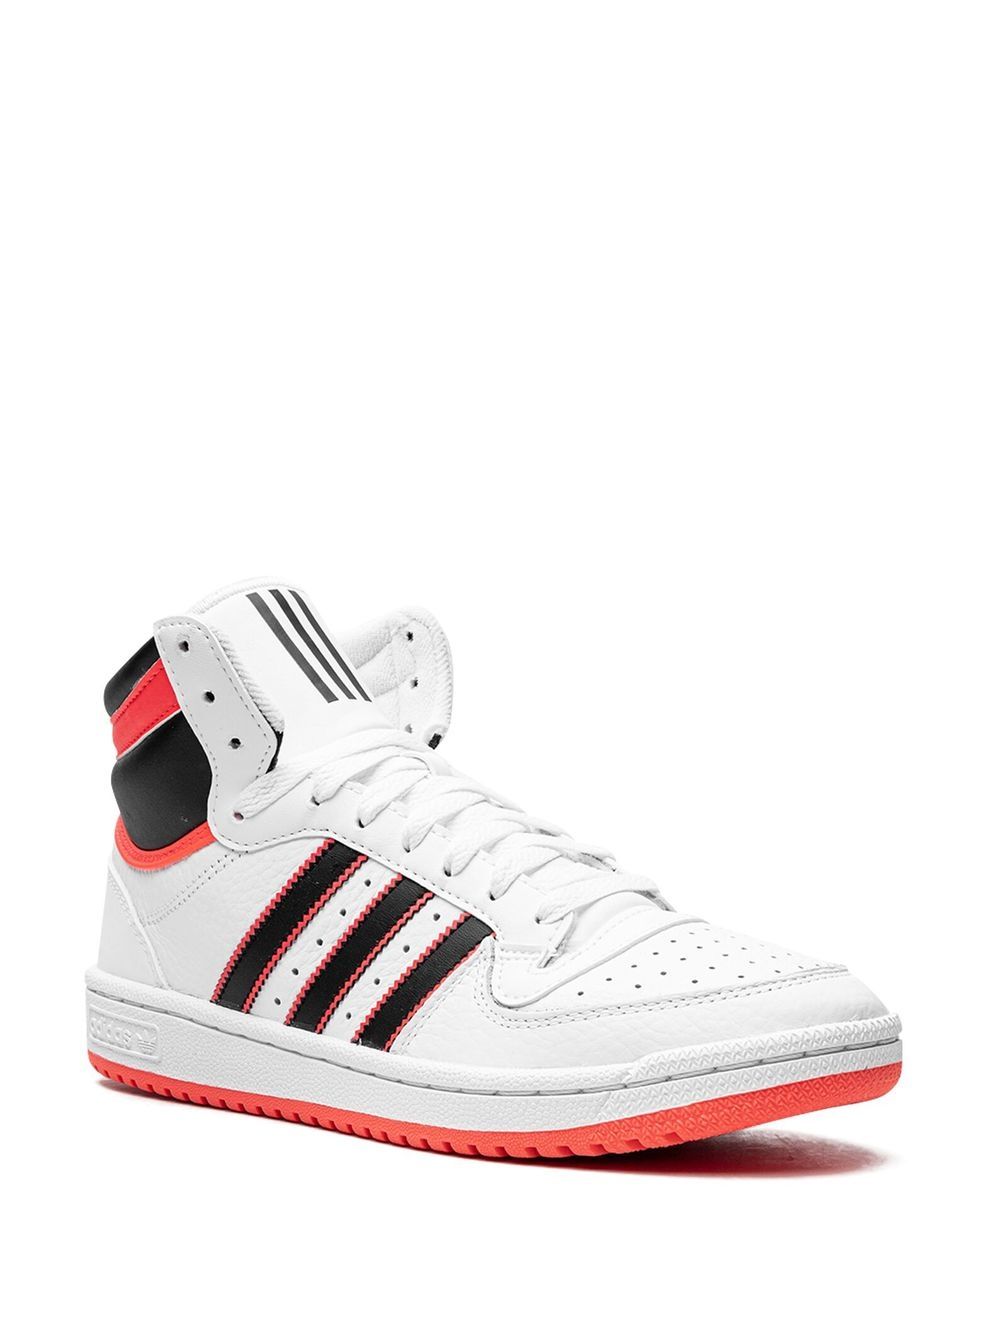 Image 2 of adidas Top Ten RB "Footwear White/Core Black/Turb" sneakers